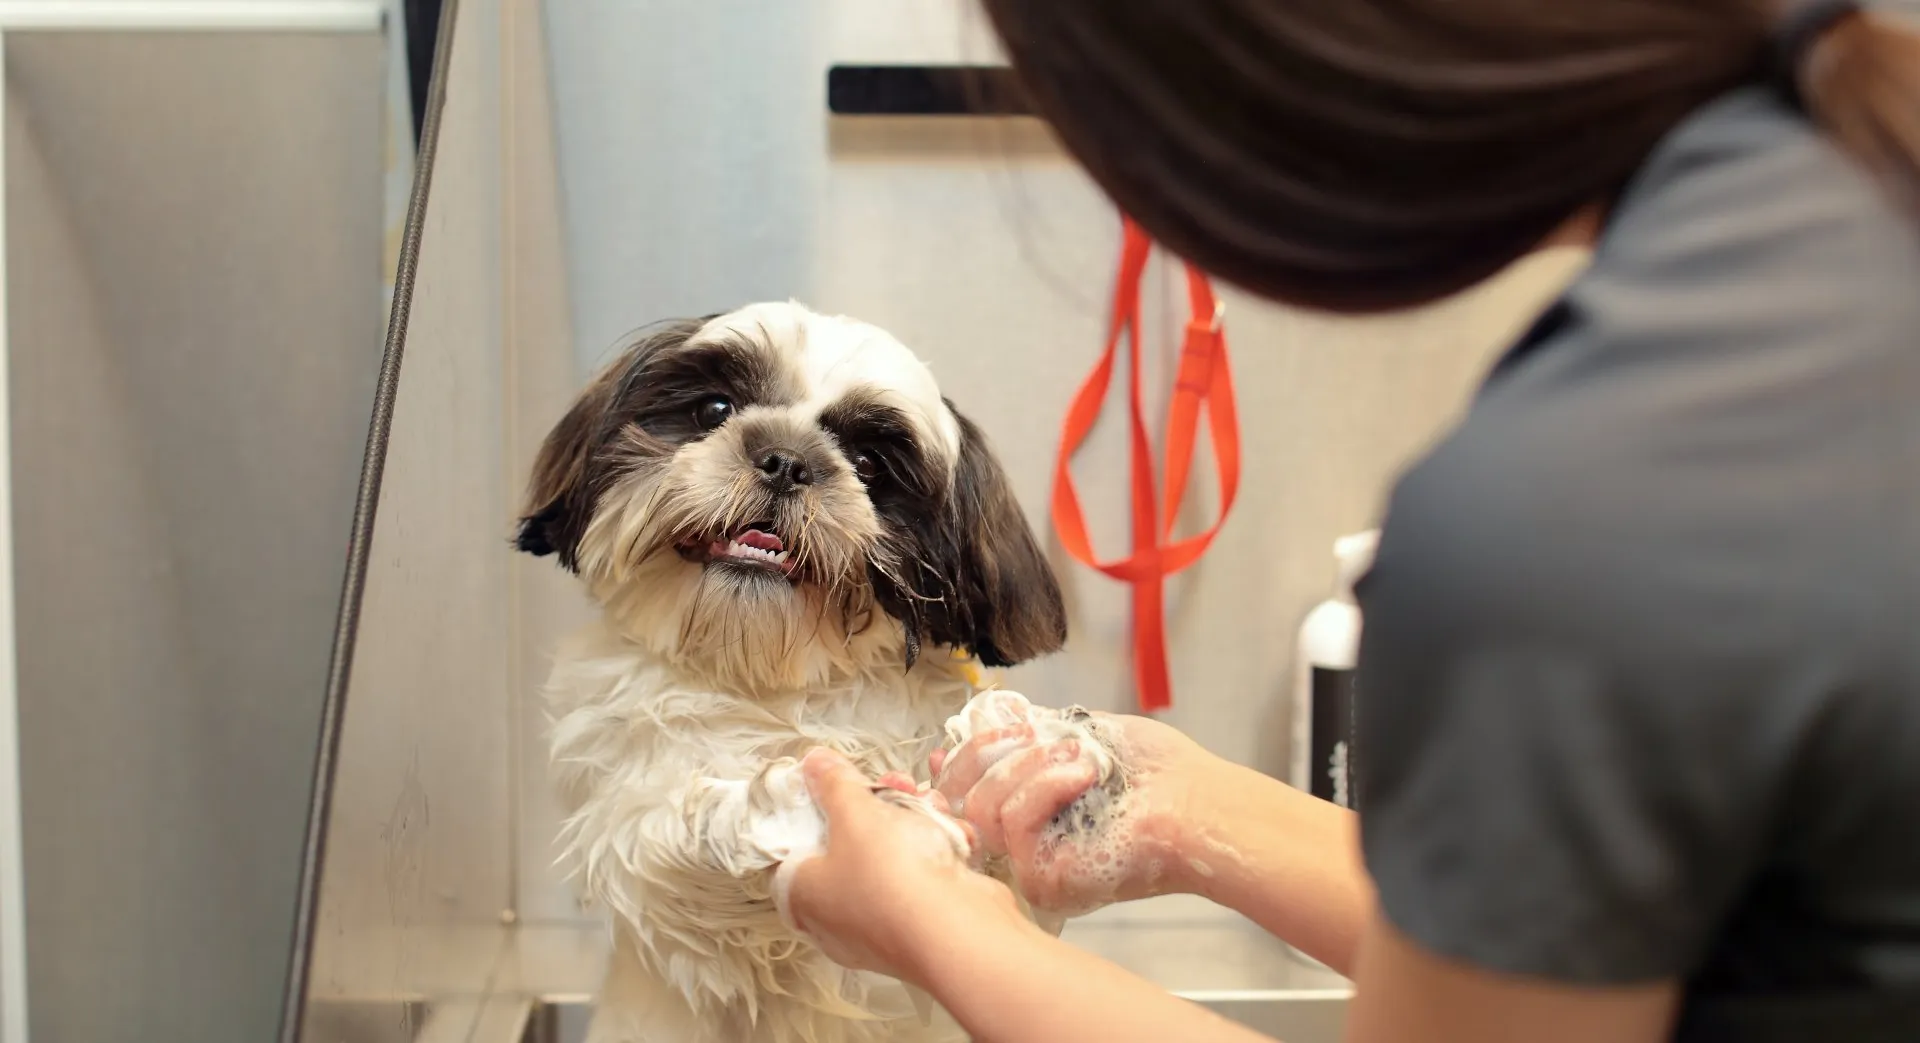 Cute dog getting a bath at the vet